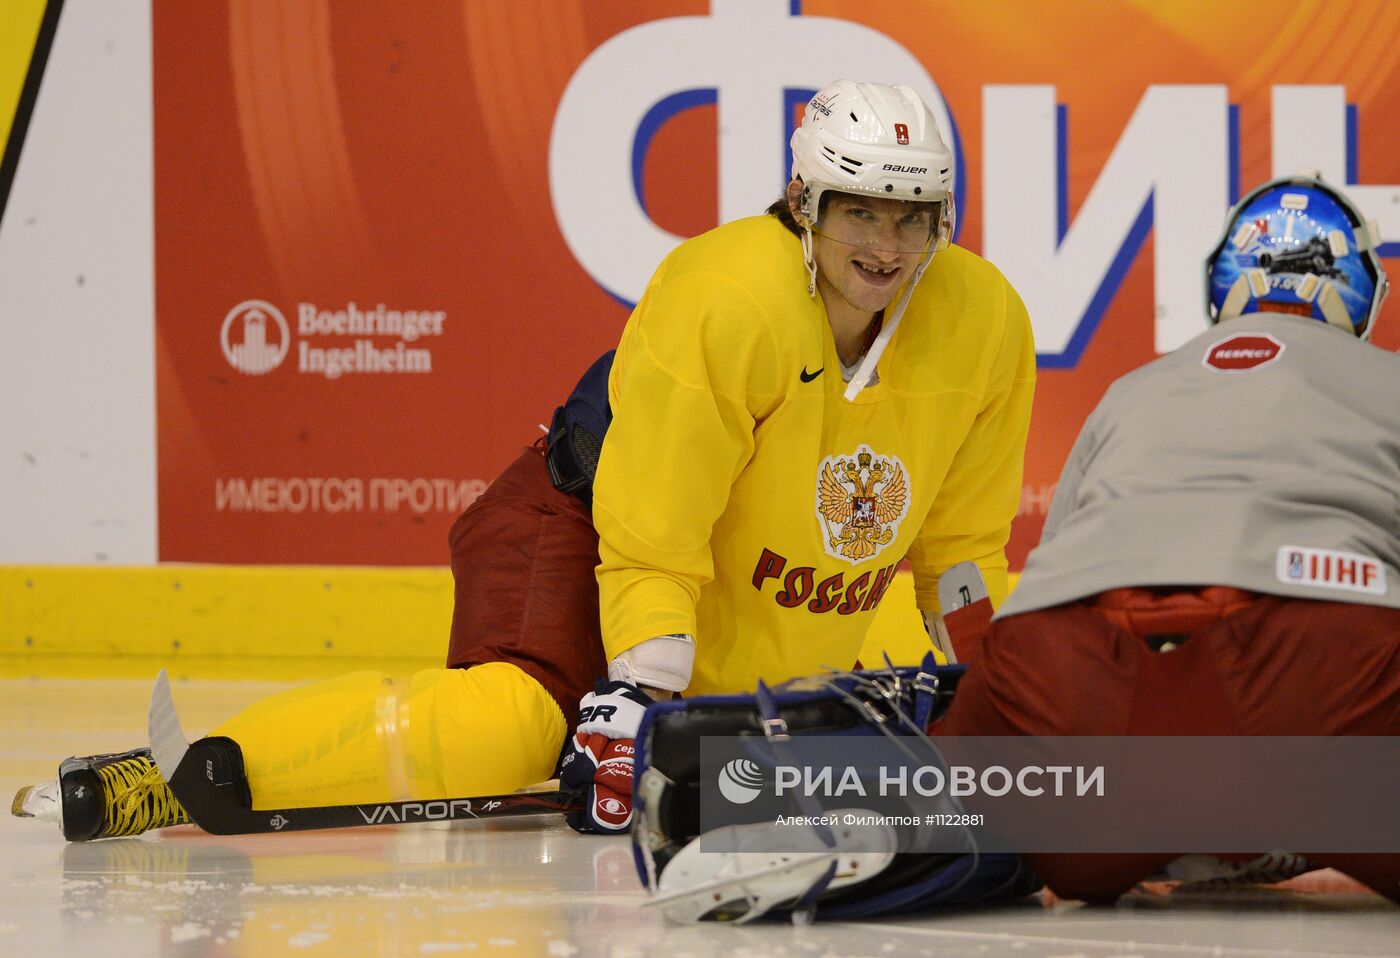 Тренировка хоккеистов А.Овечкина и А.Семина на арене "Ховет"